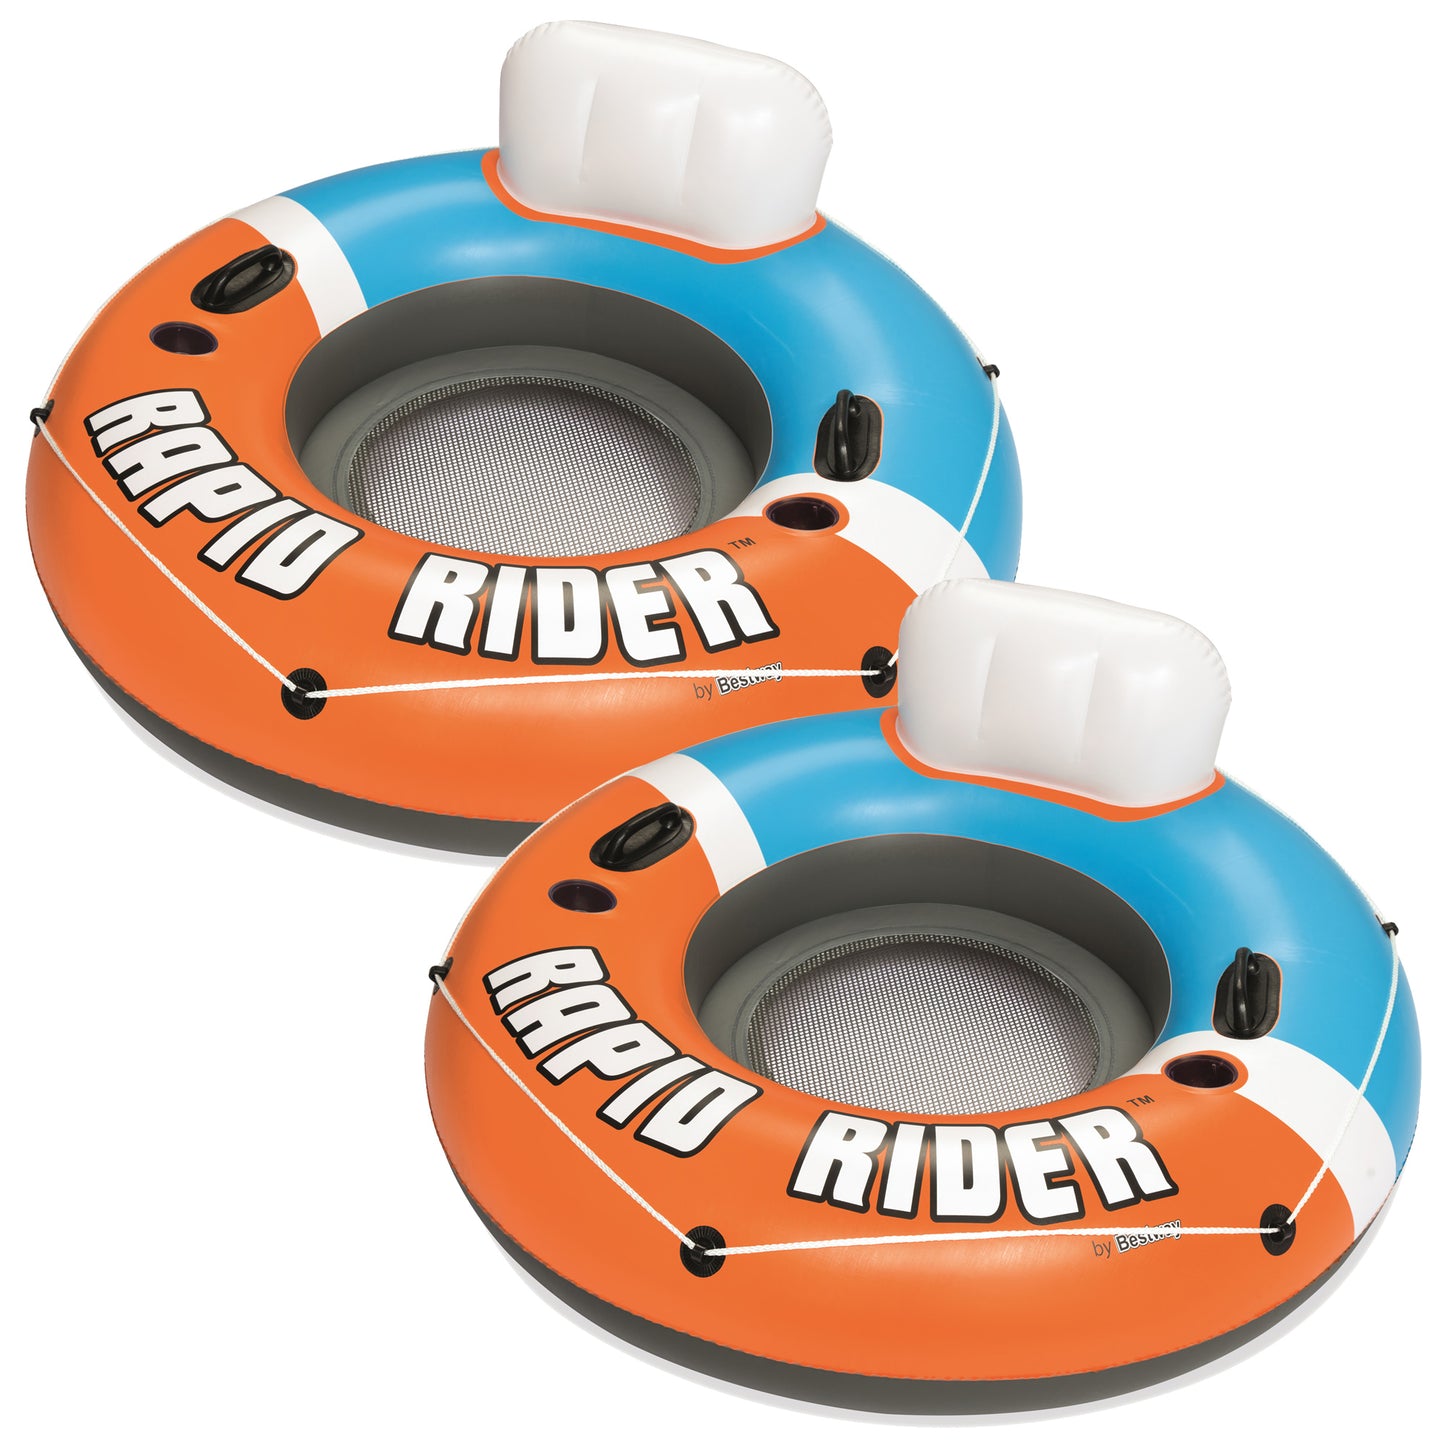 Bestway CoolerZ Rapid Rider Inflatable Blow Up Pool Chair Tube, Orange (2 Pack)